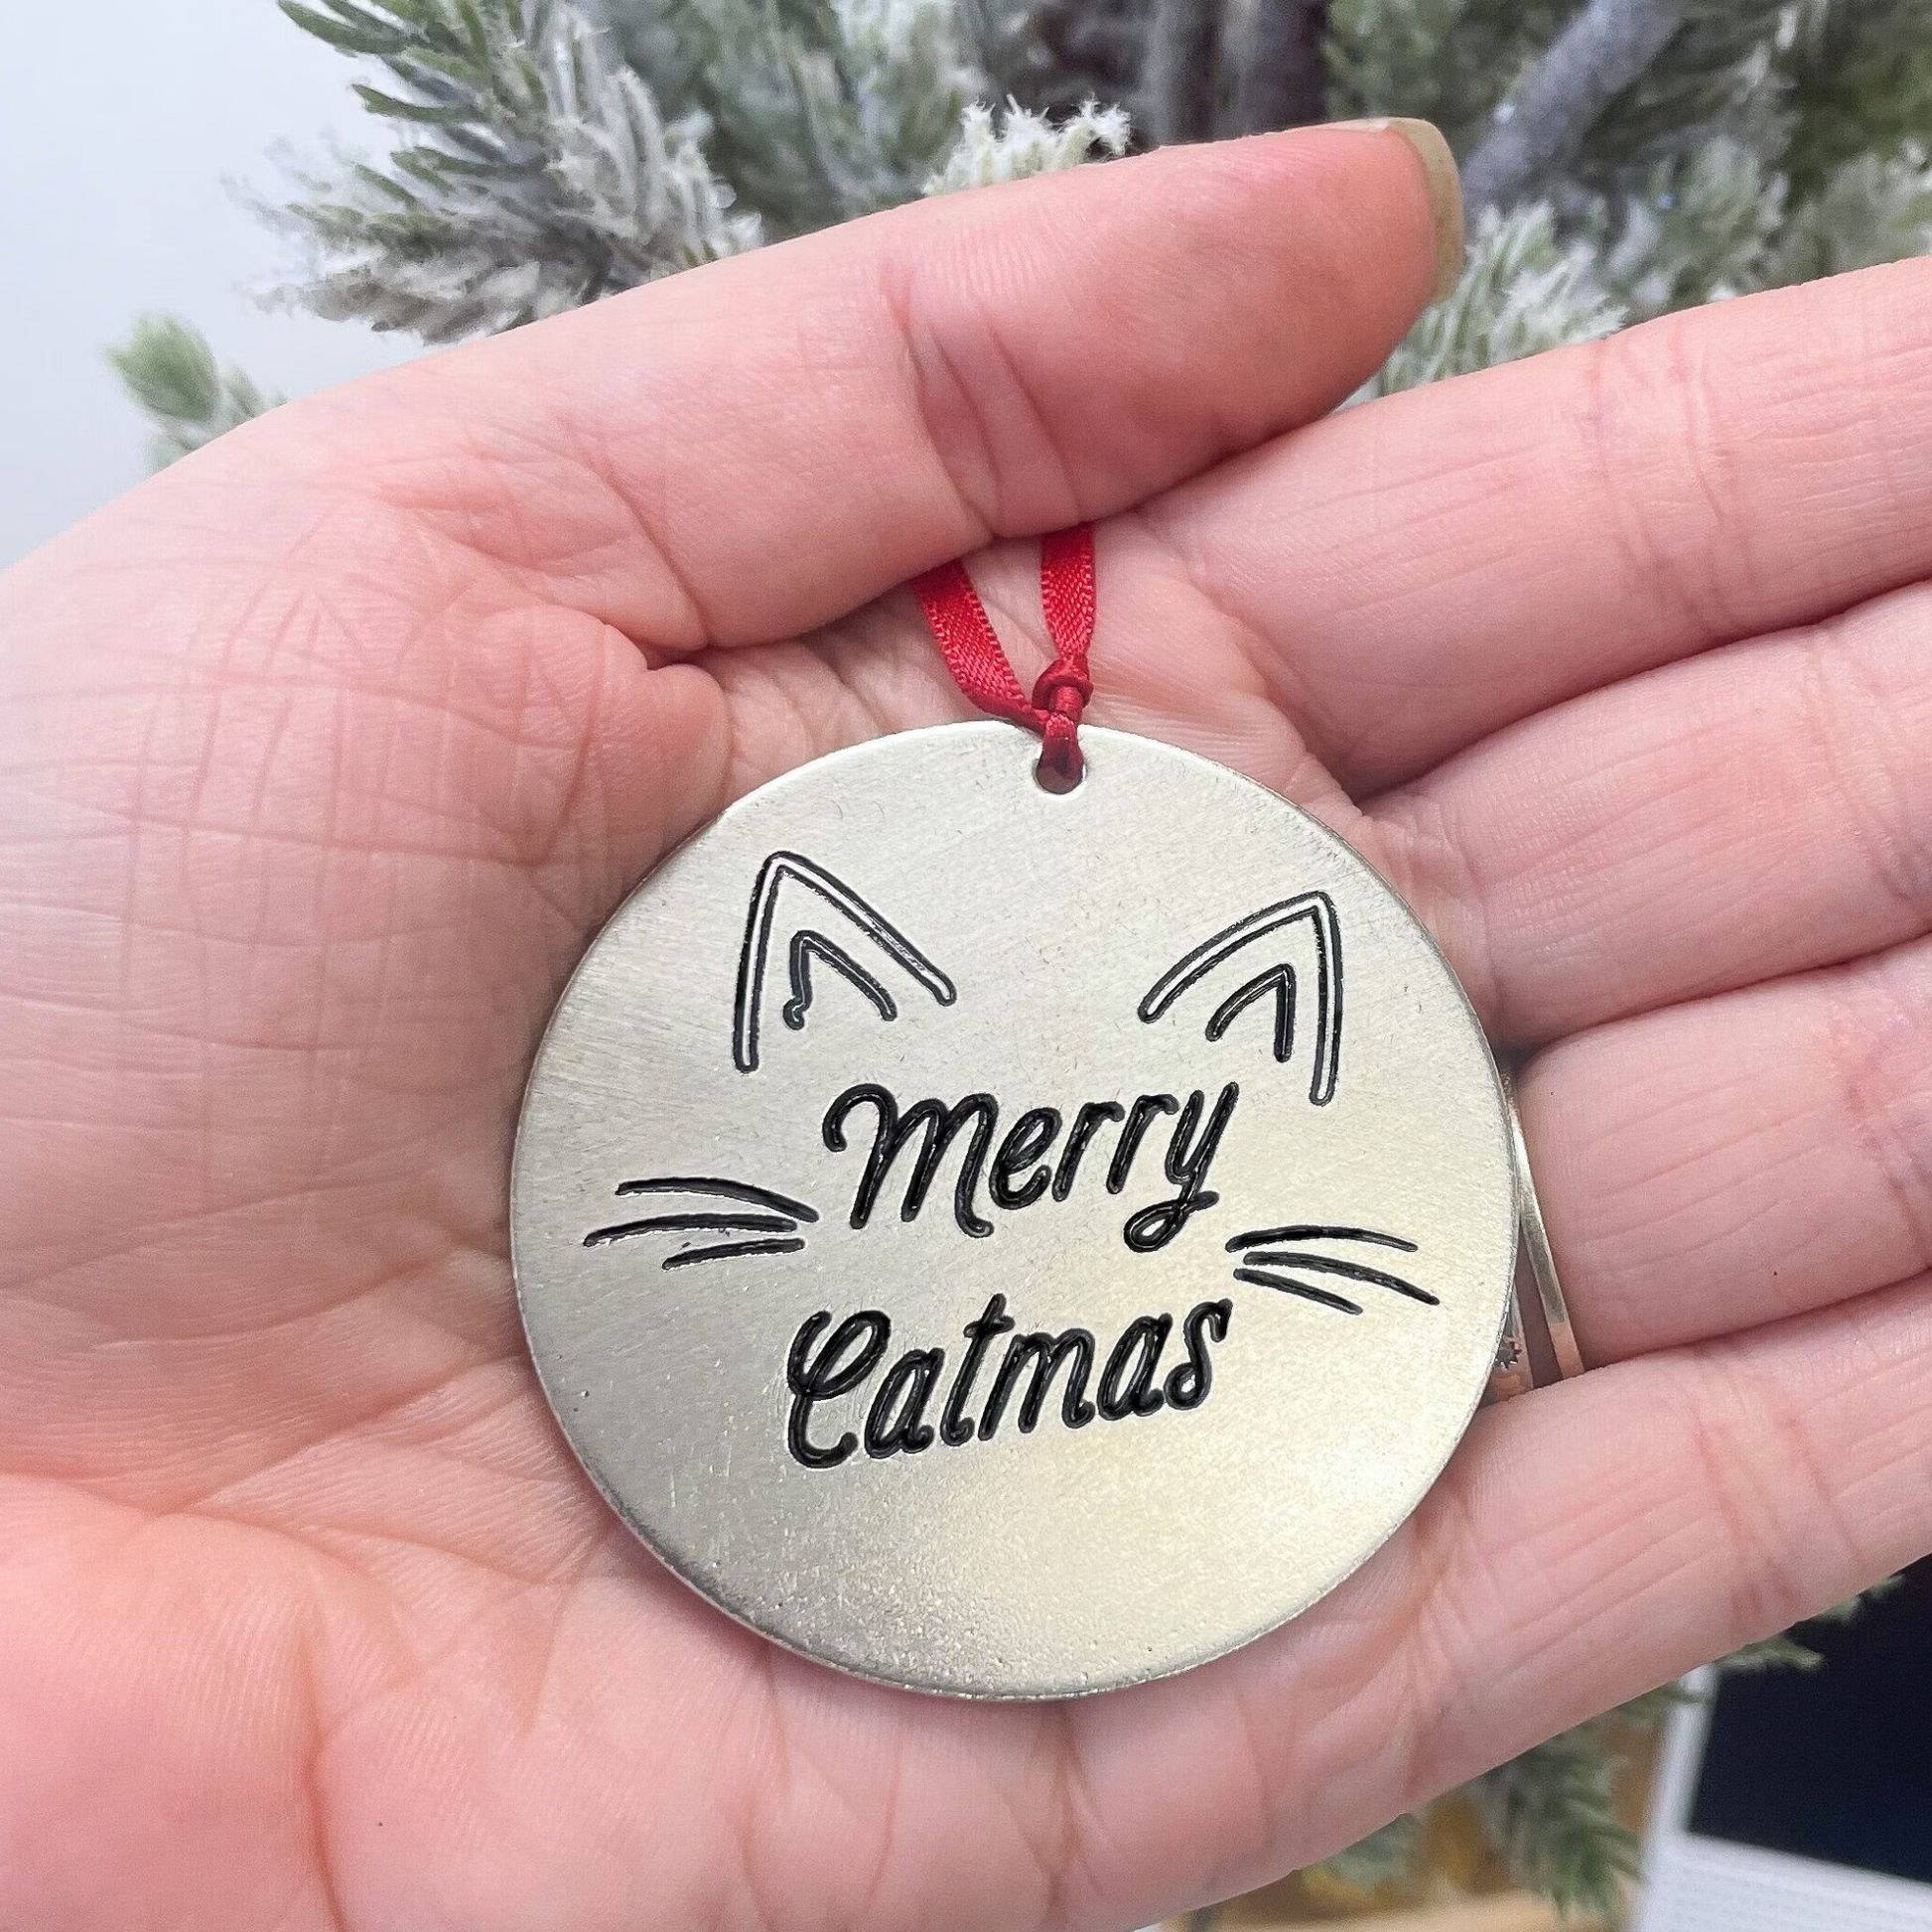 Pet's first Christmas - Cat's first Christmas - Kitten Christmas - Holiday Ornament - Secret Santa Gift - Cat Lover Gift - Cat Ornament 